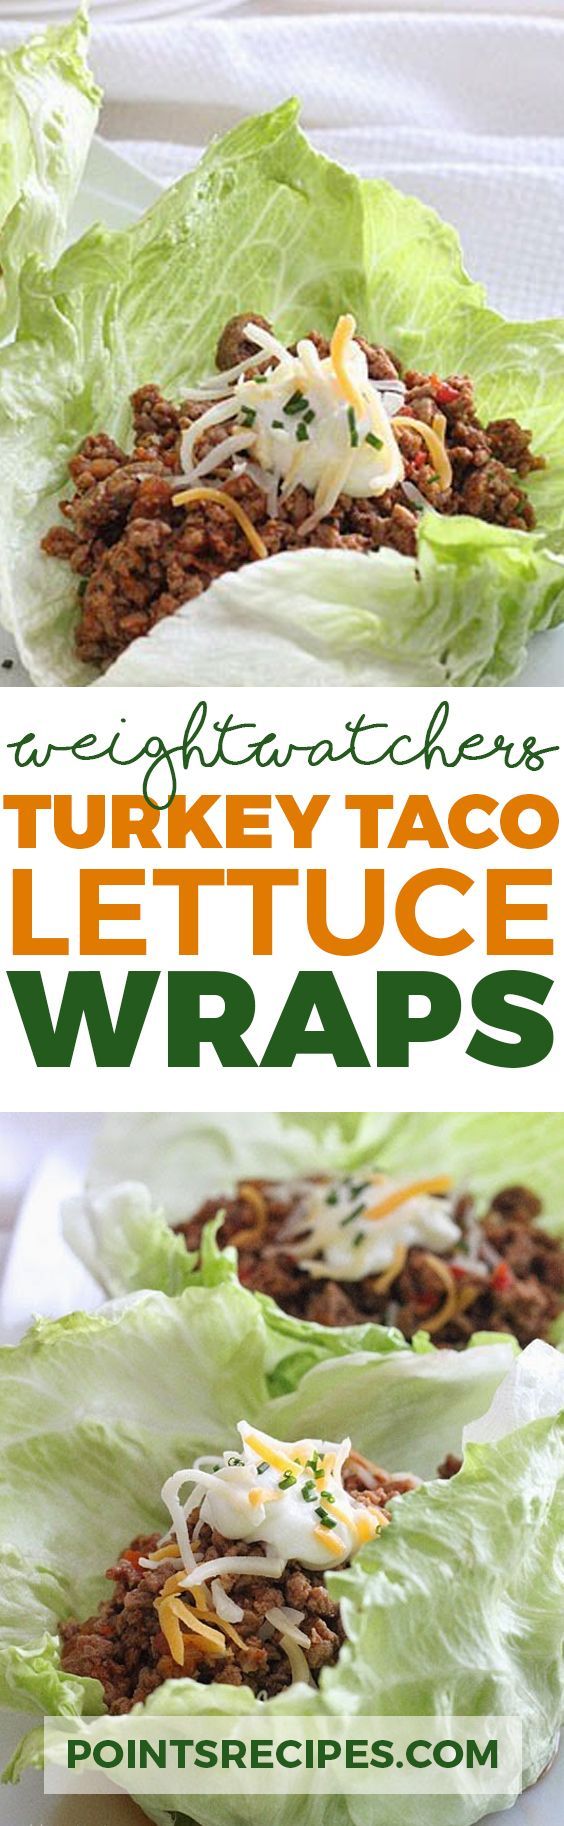 Turkey Taco Lettuce Wraps (Weight Watchers SmartPoints)